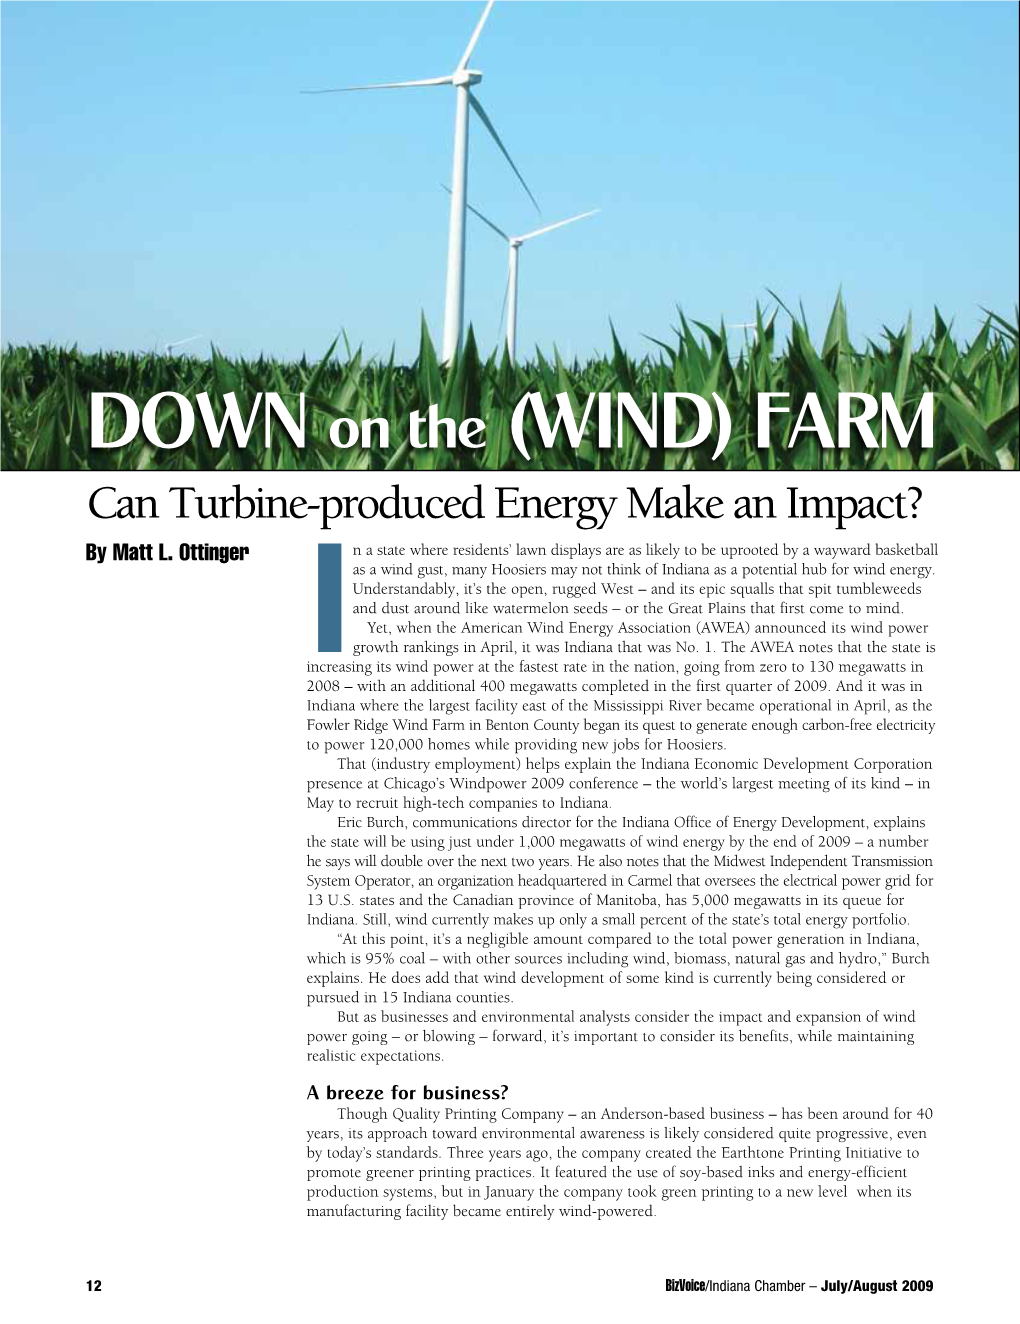 (Wind) Farm Can Turbine-Produced Energy Make an Impact? by Matt L